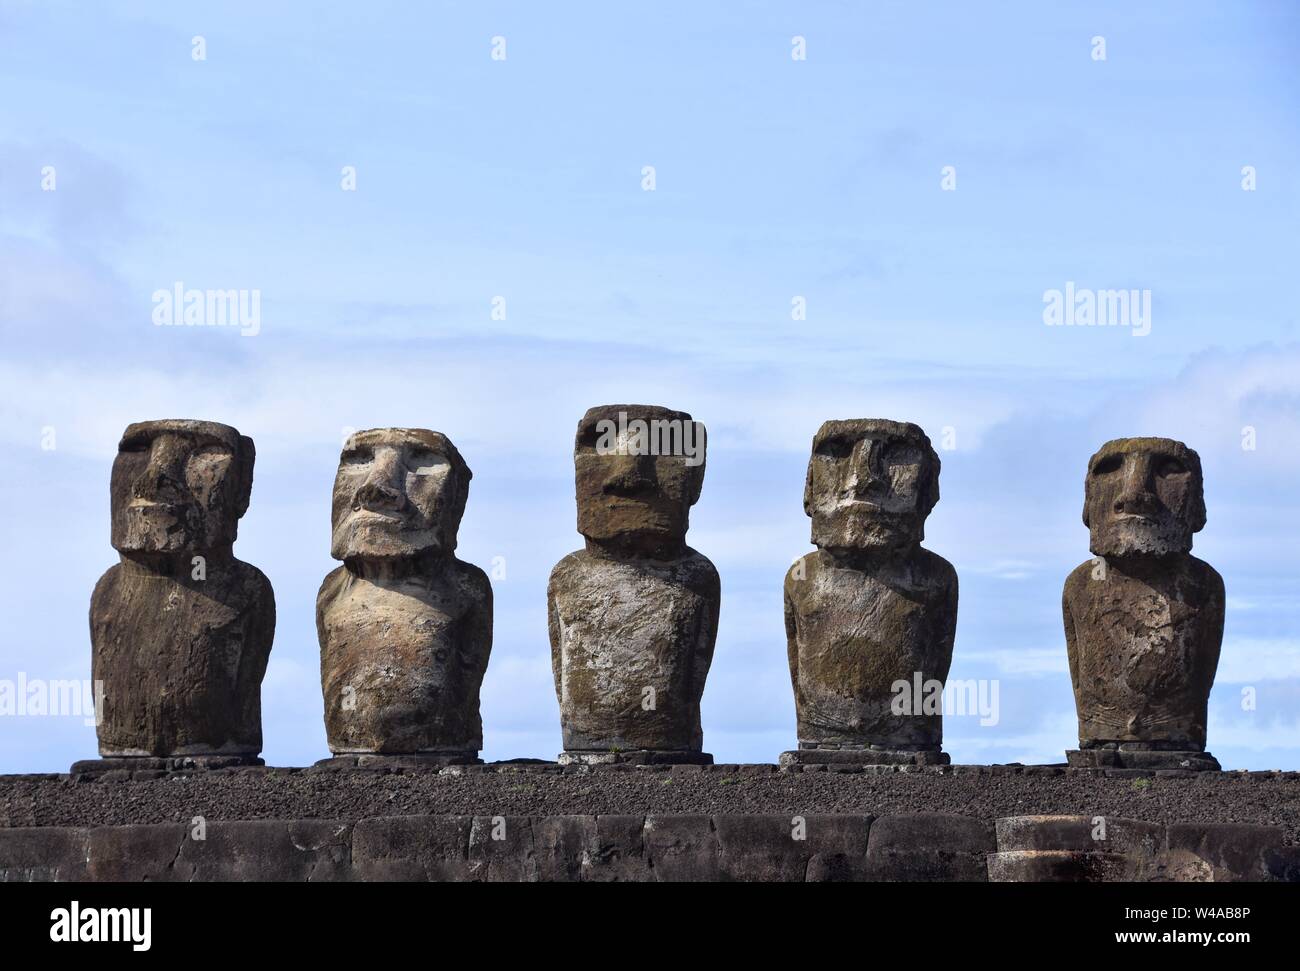 The mysterious Ahu Tongariki Moai heads of the Easter Island, Chile Stock Photo